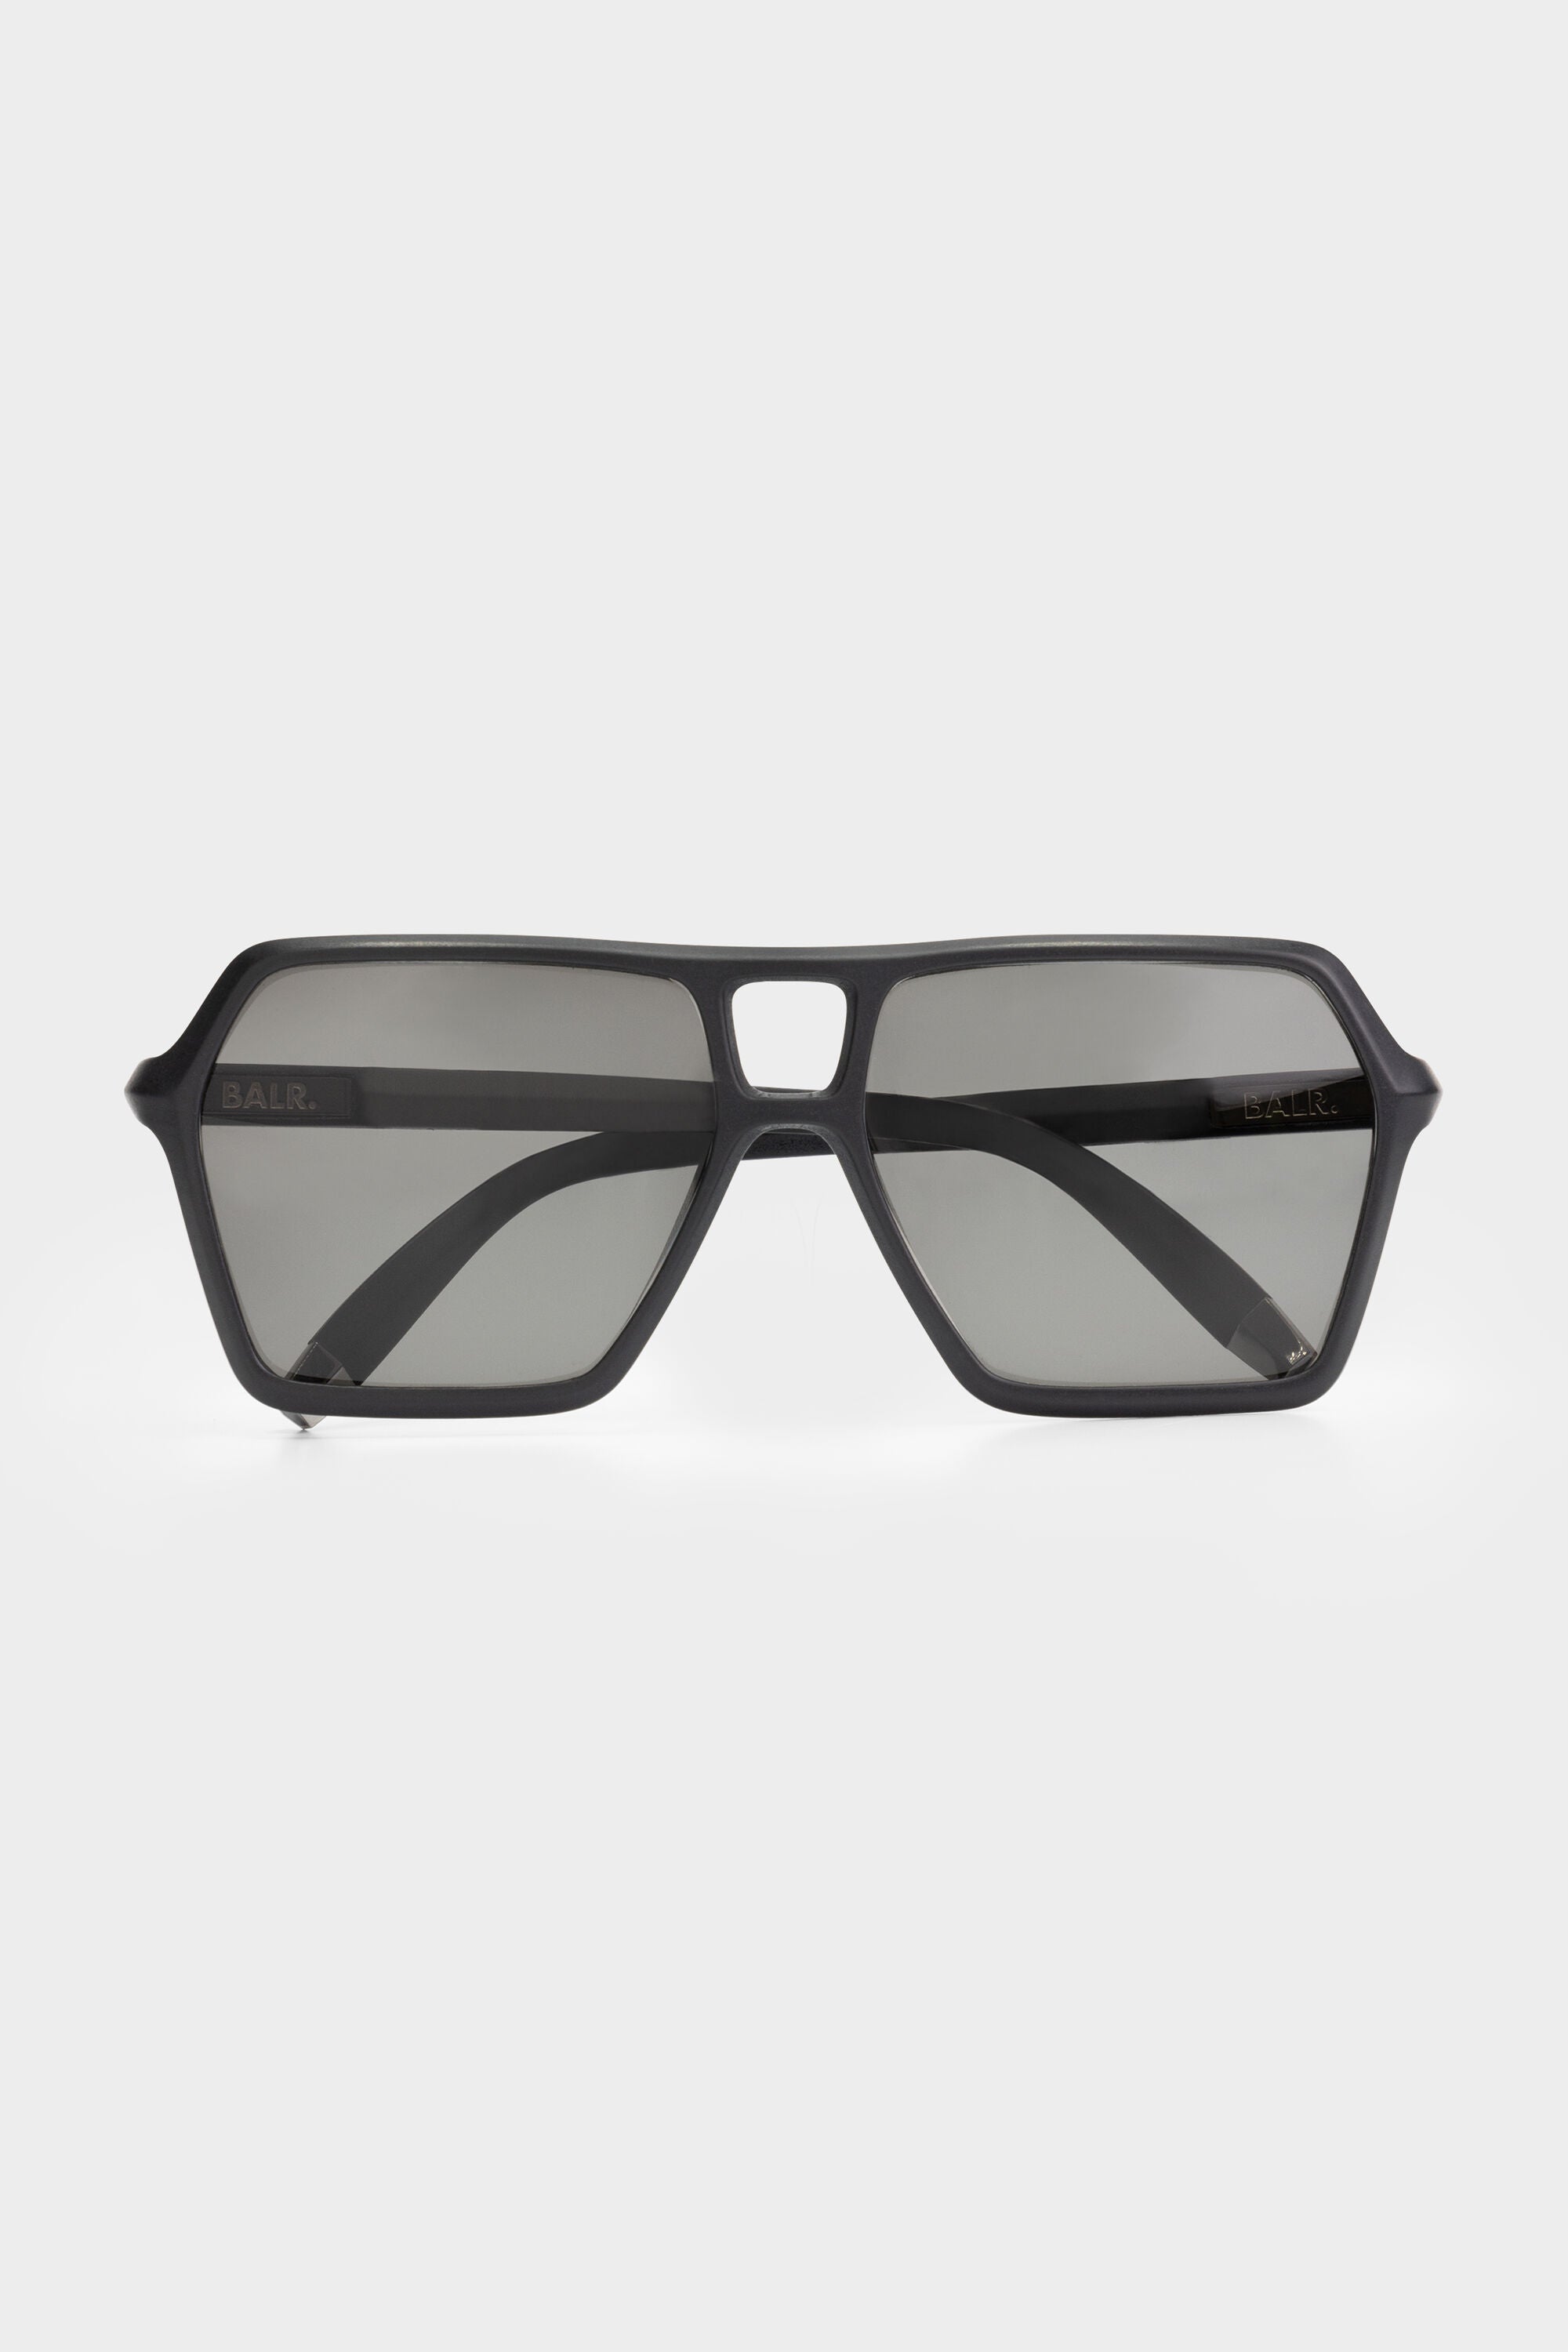 Classic Aviator Hexagon Sunglasses Black/Smoke Grey